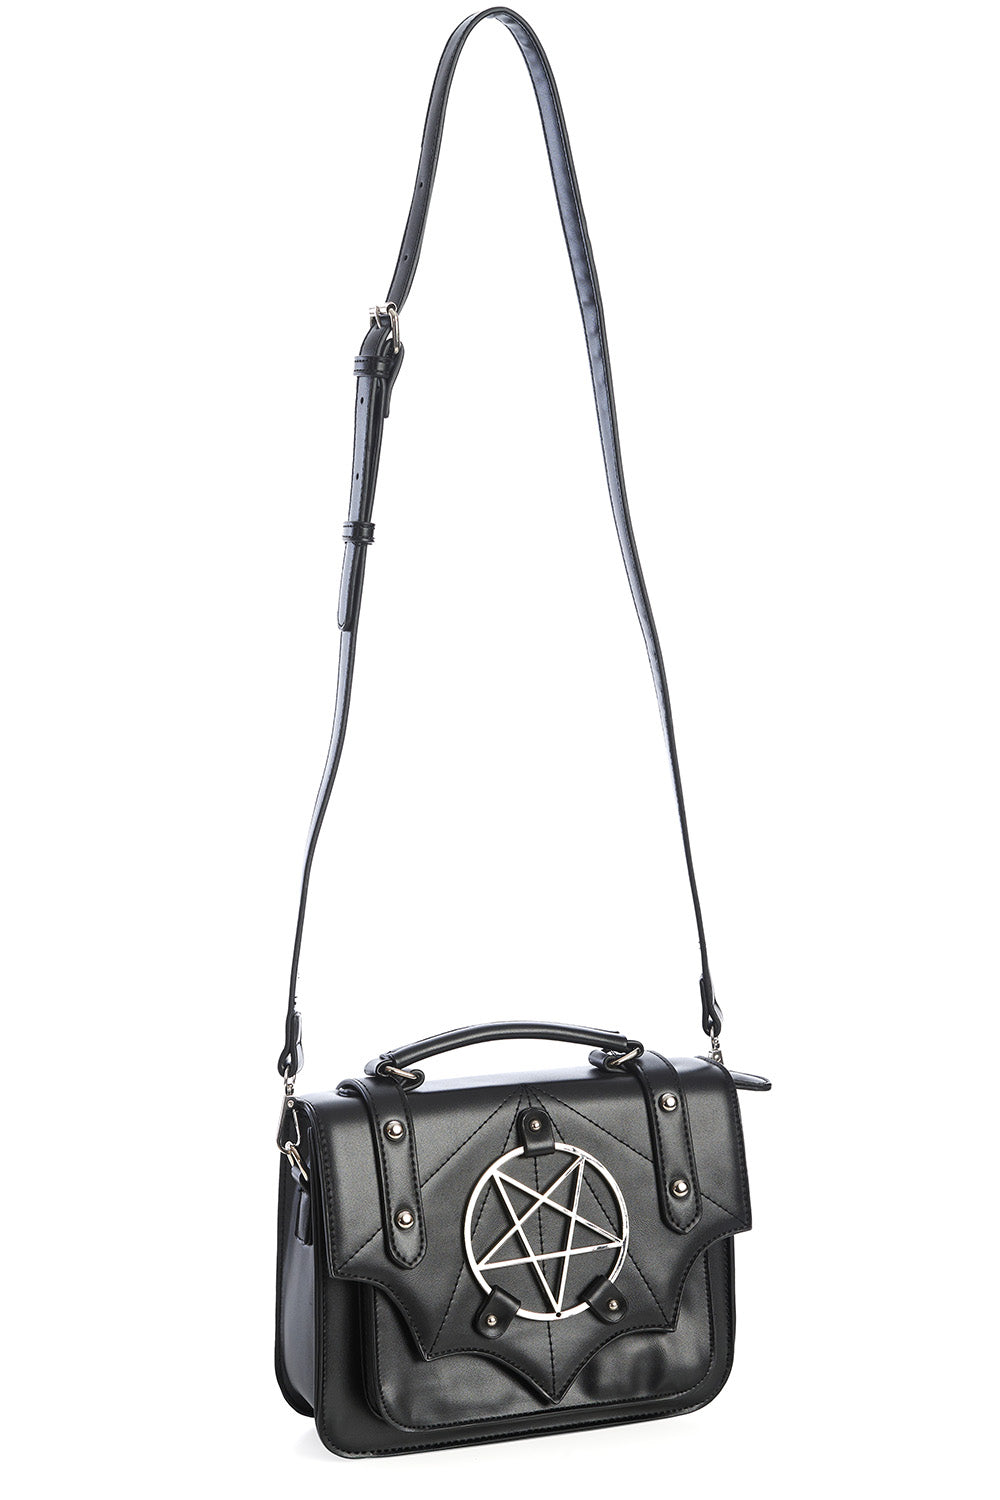 Banned Moloch Pentagram Batwing Cross Body Satchel Goth Bag, Black, One-Size